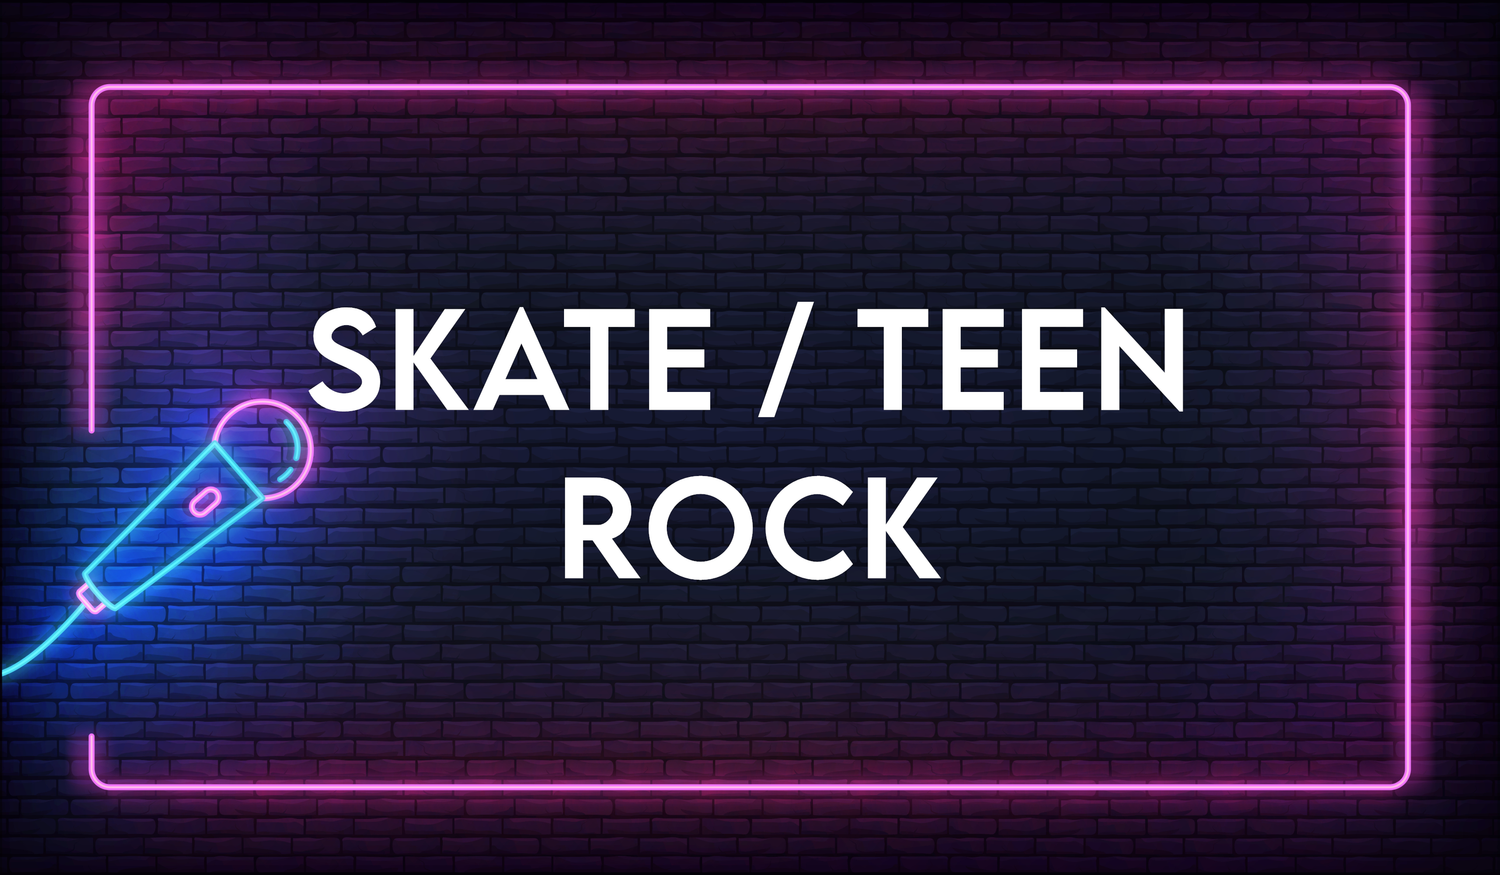 Skate/Teen Rock